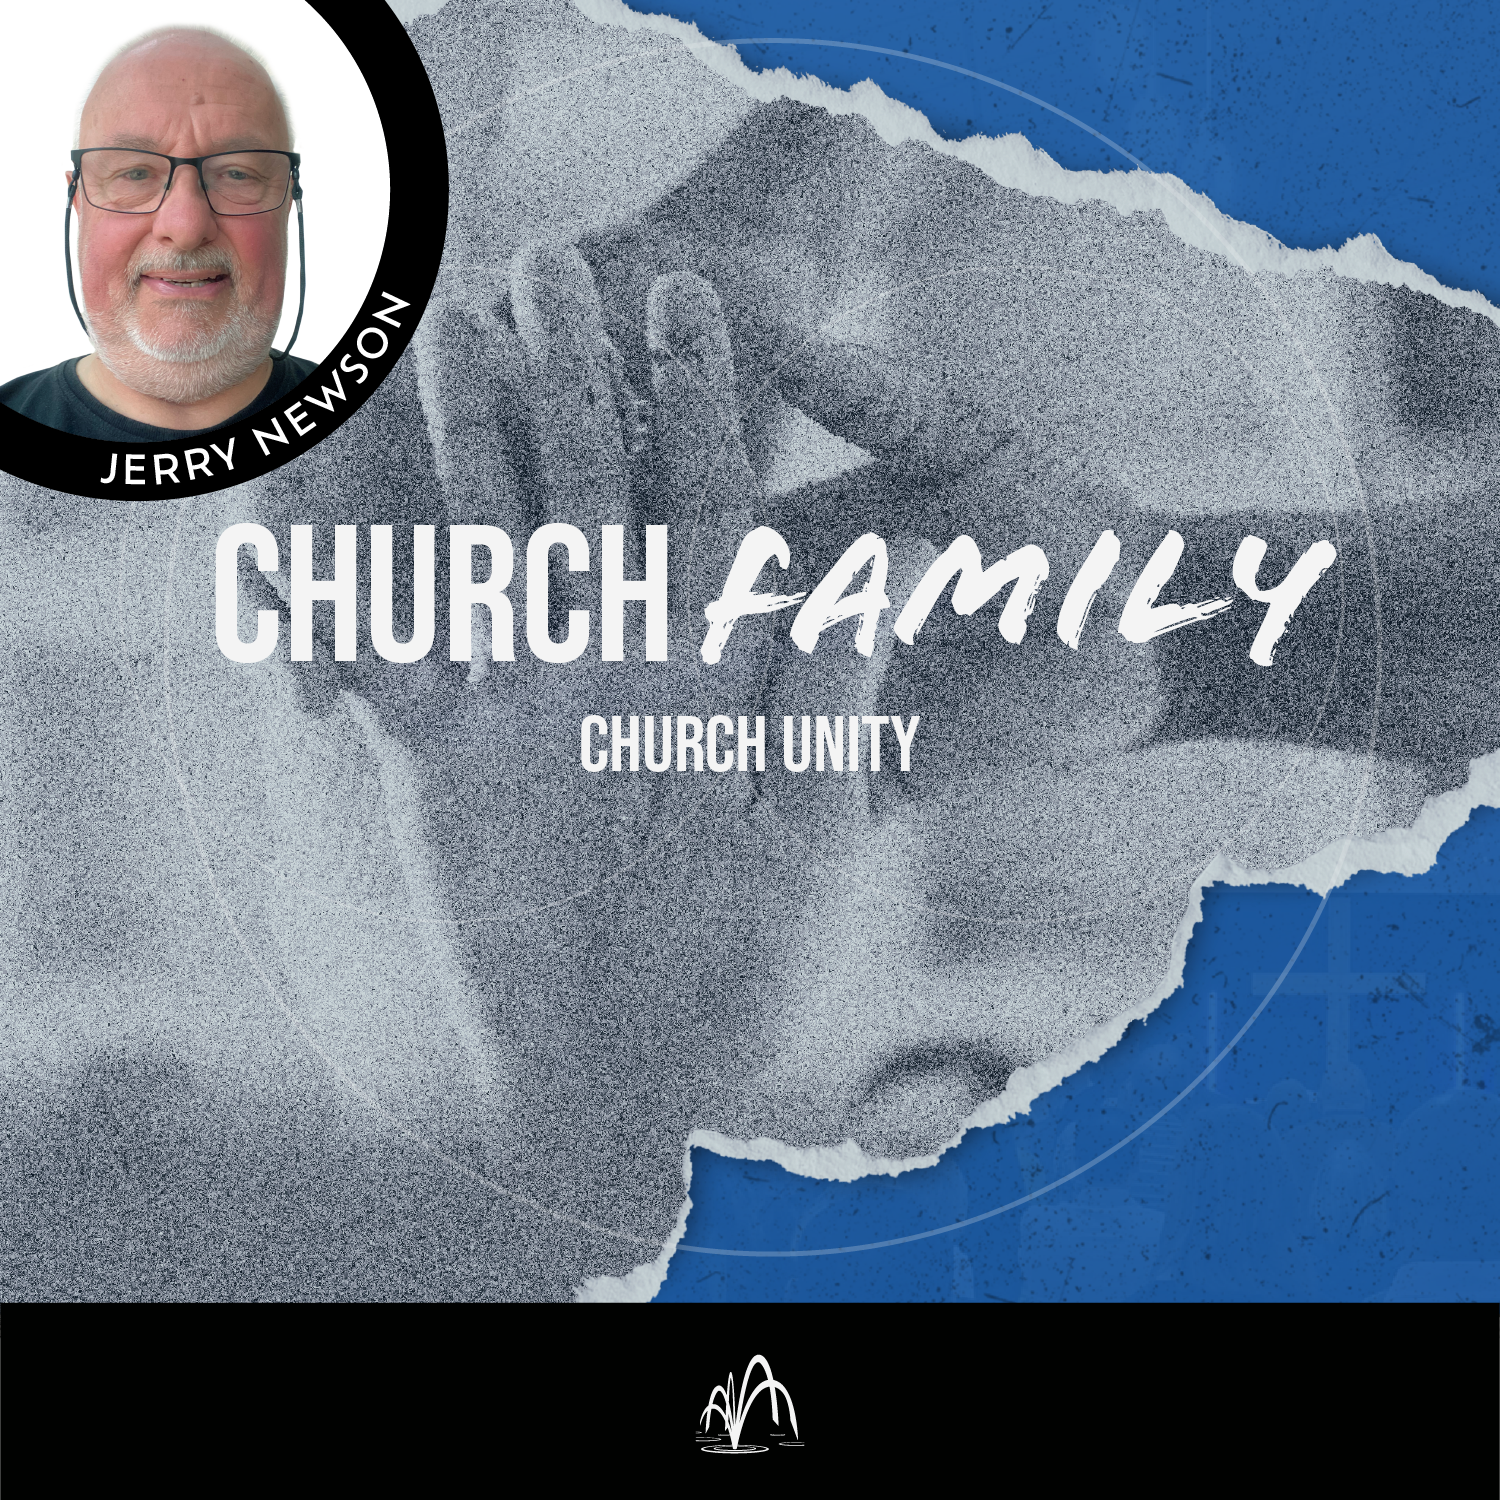 Church Family - Youtube Slide - CHURCH UNITY-01.png